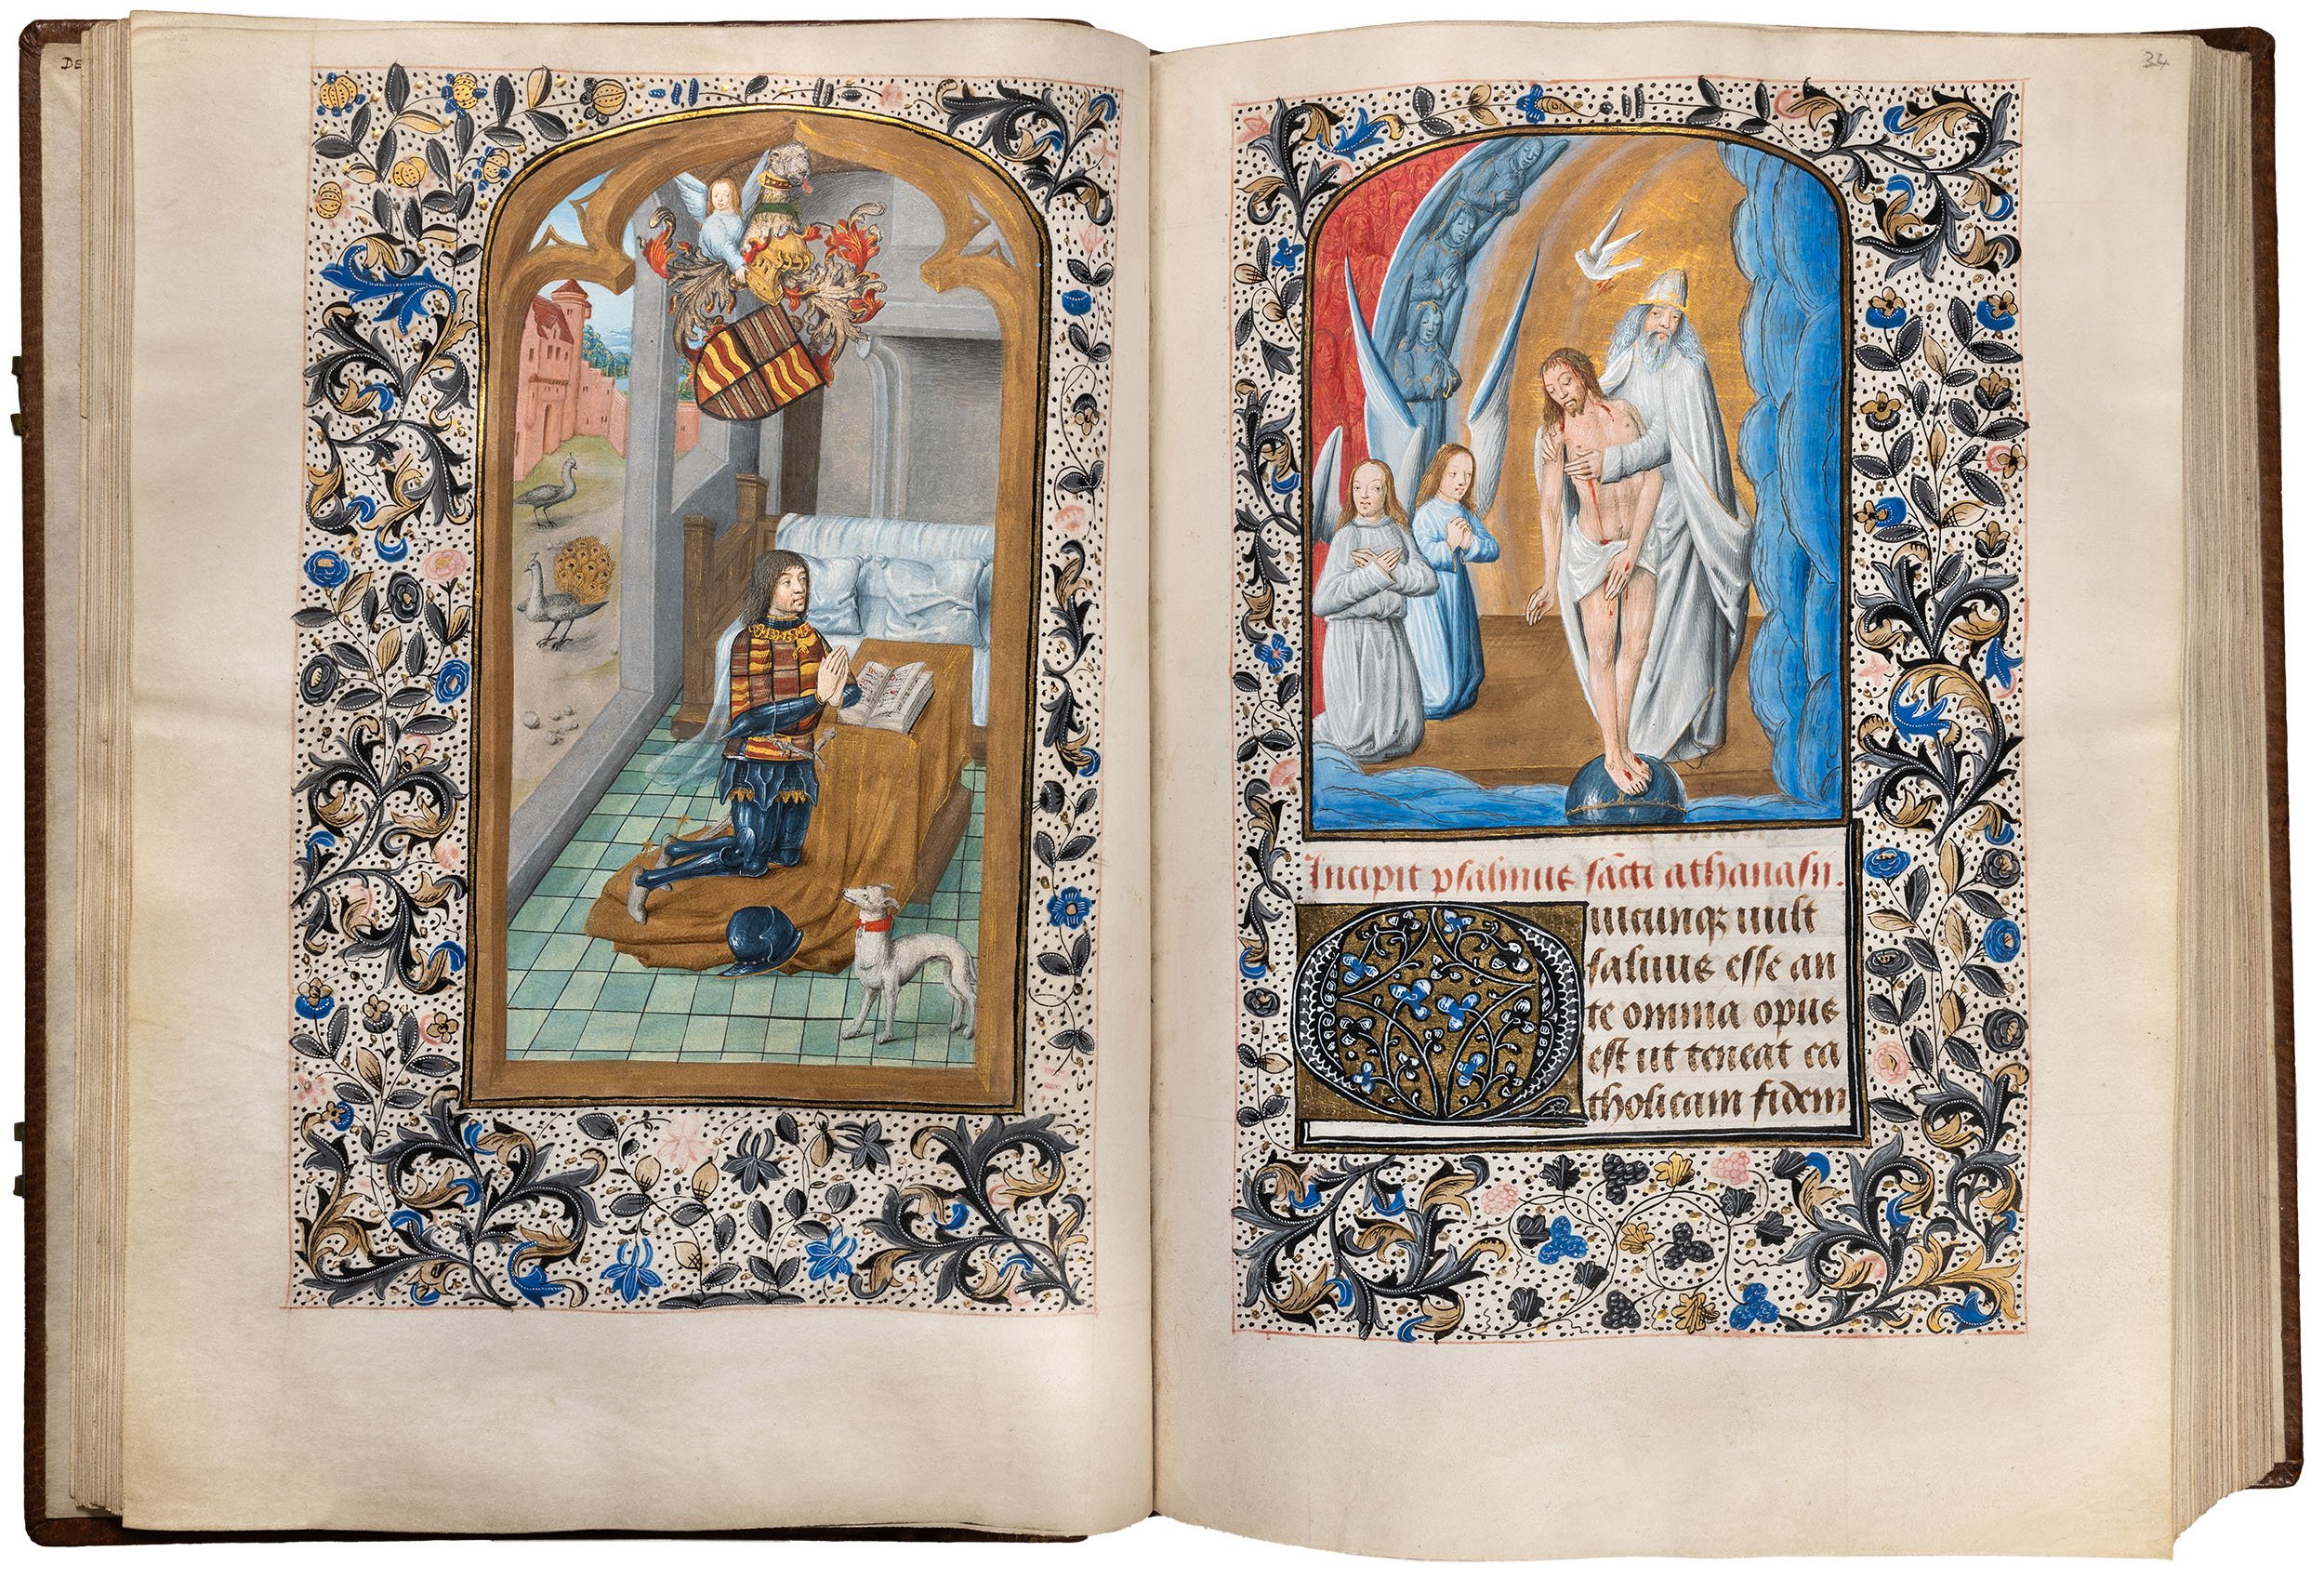 Book-of-hours-claude-toulongeon-grisaille-order-golden-fleece-bruges-edward-iv-folio-21.jpg